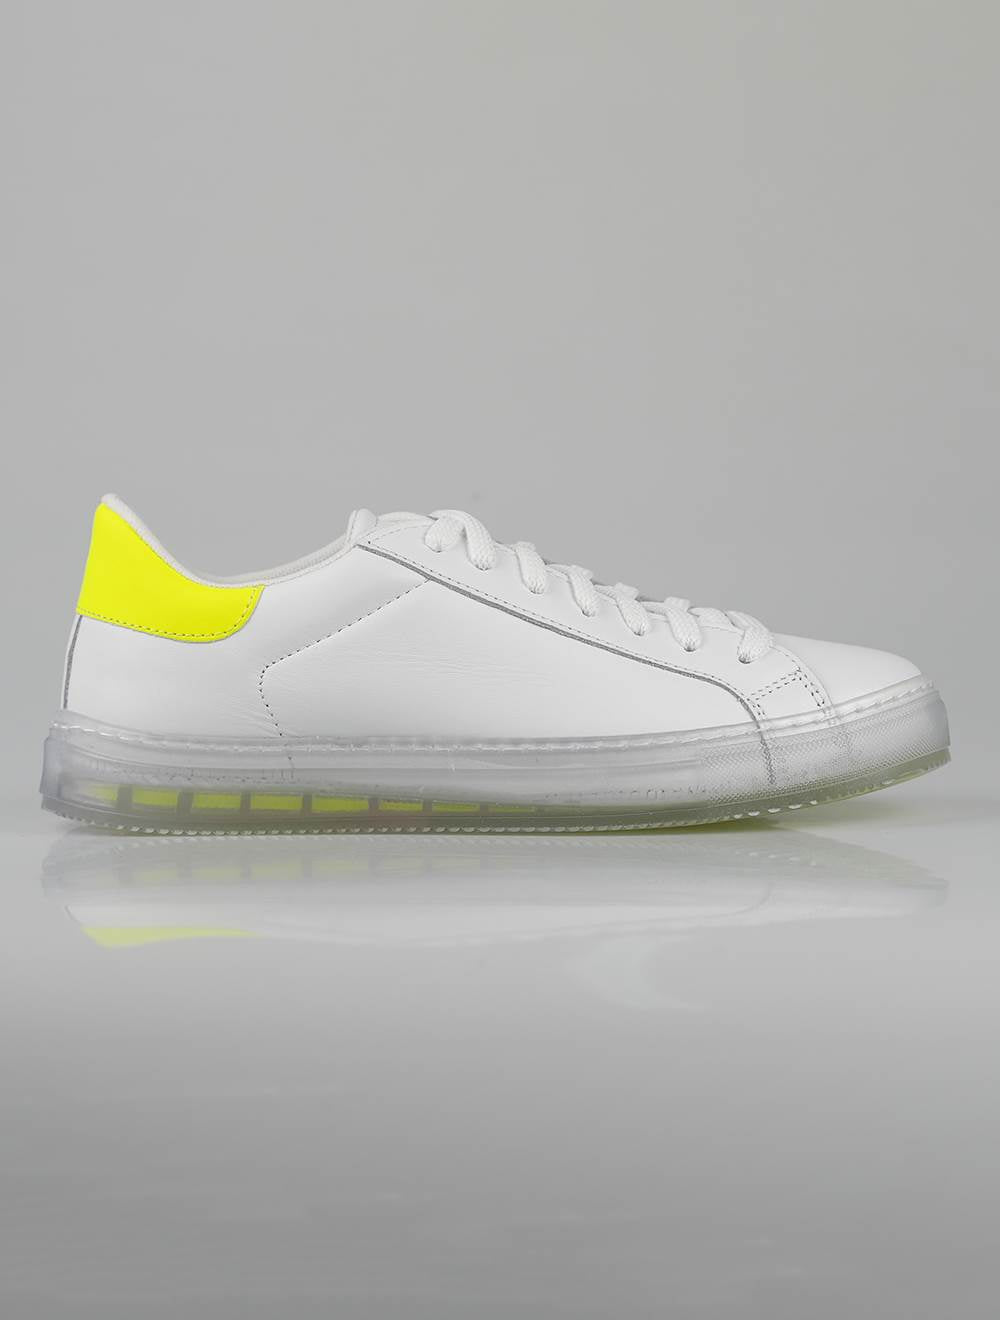 Kiton Weiß Gelb Leder Sneakers Sonderausgabe